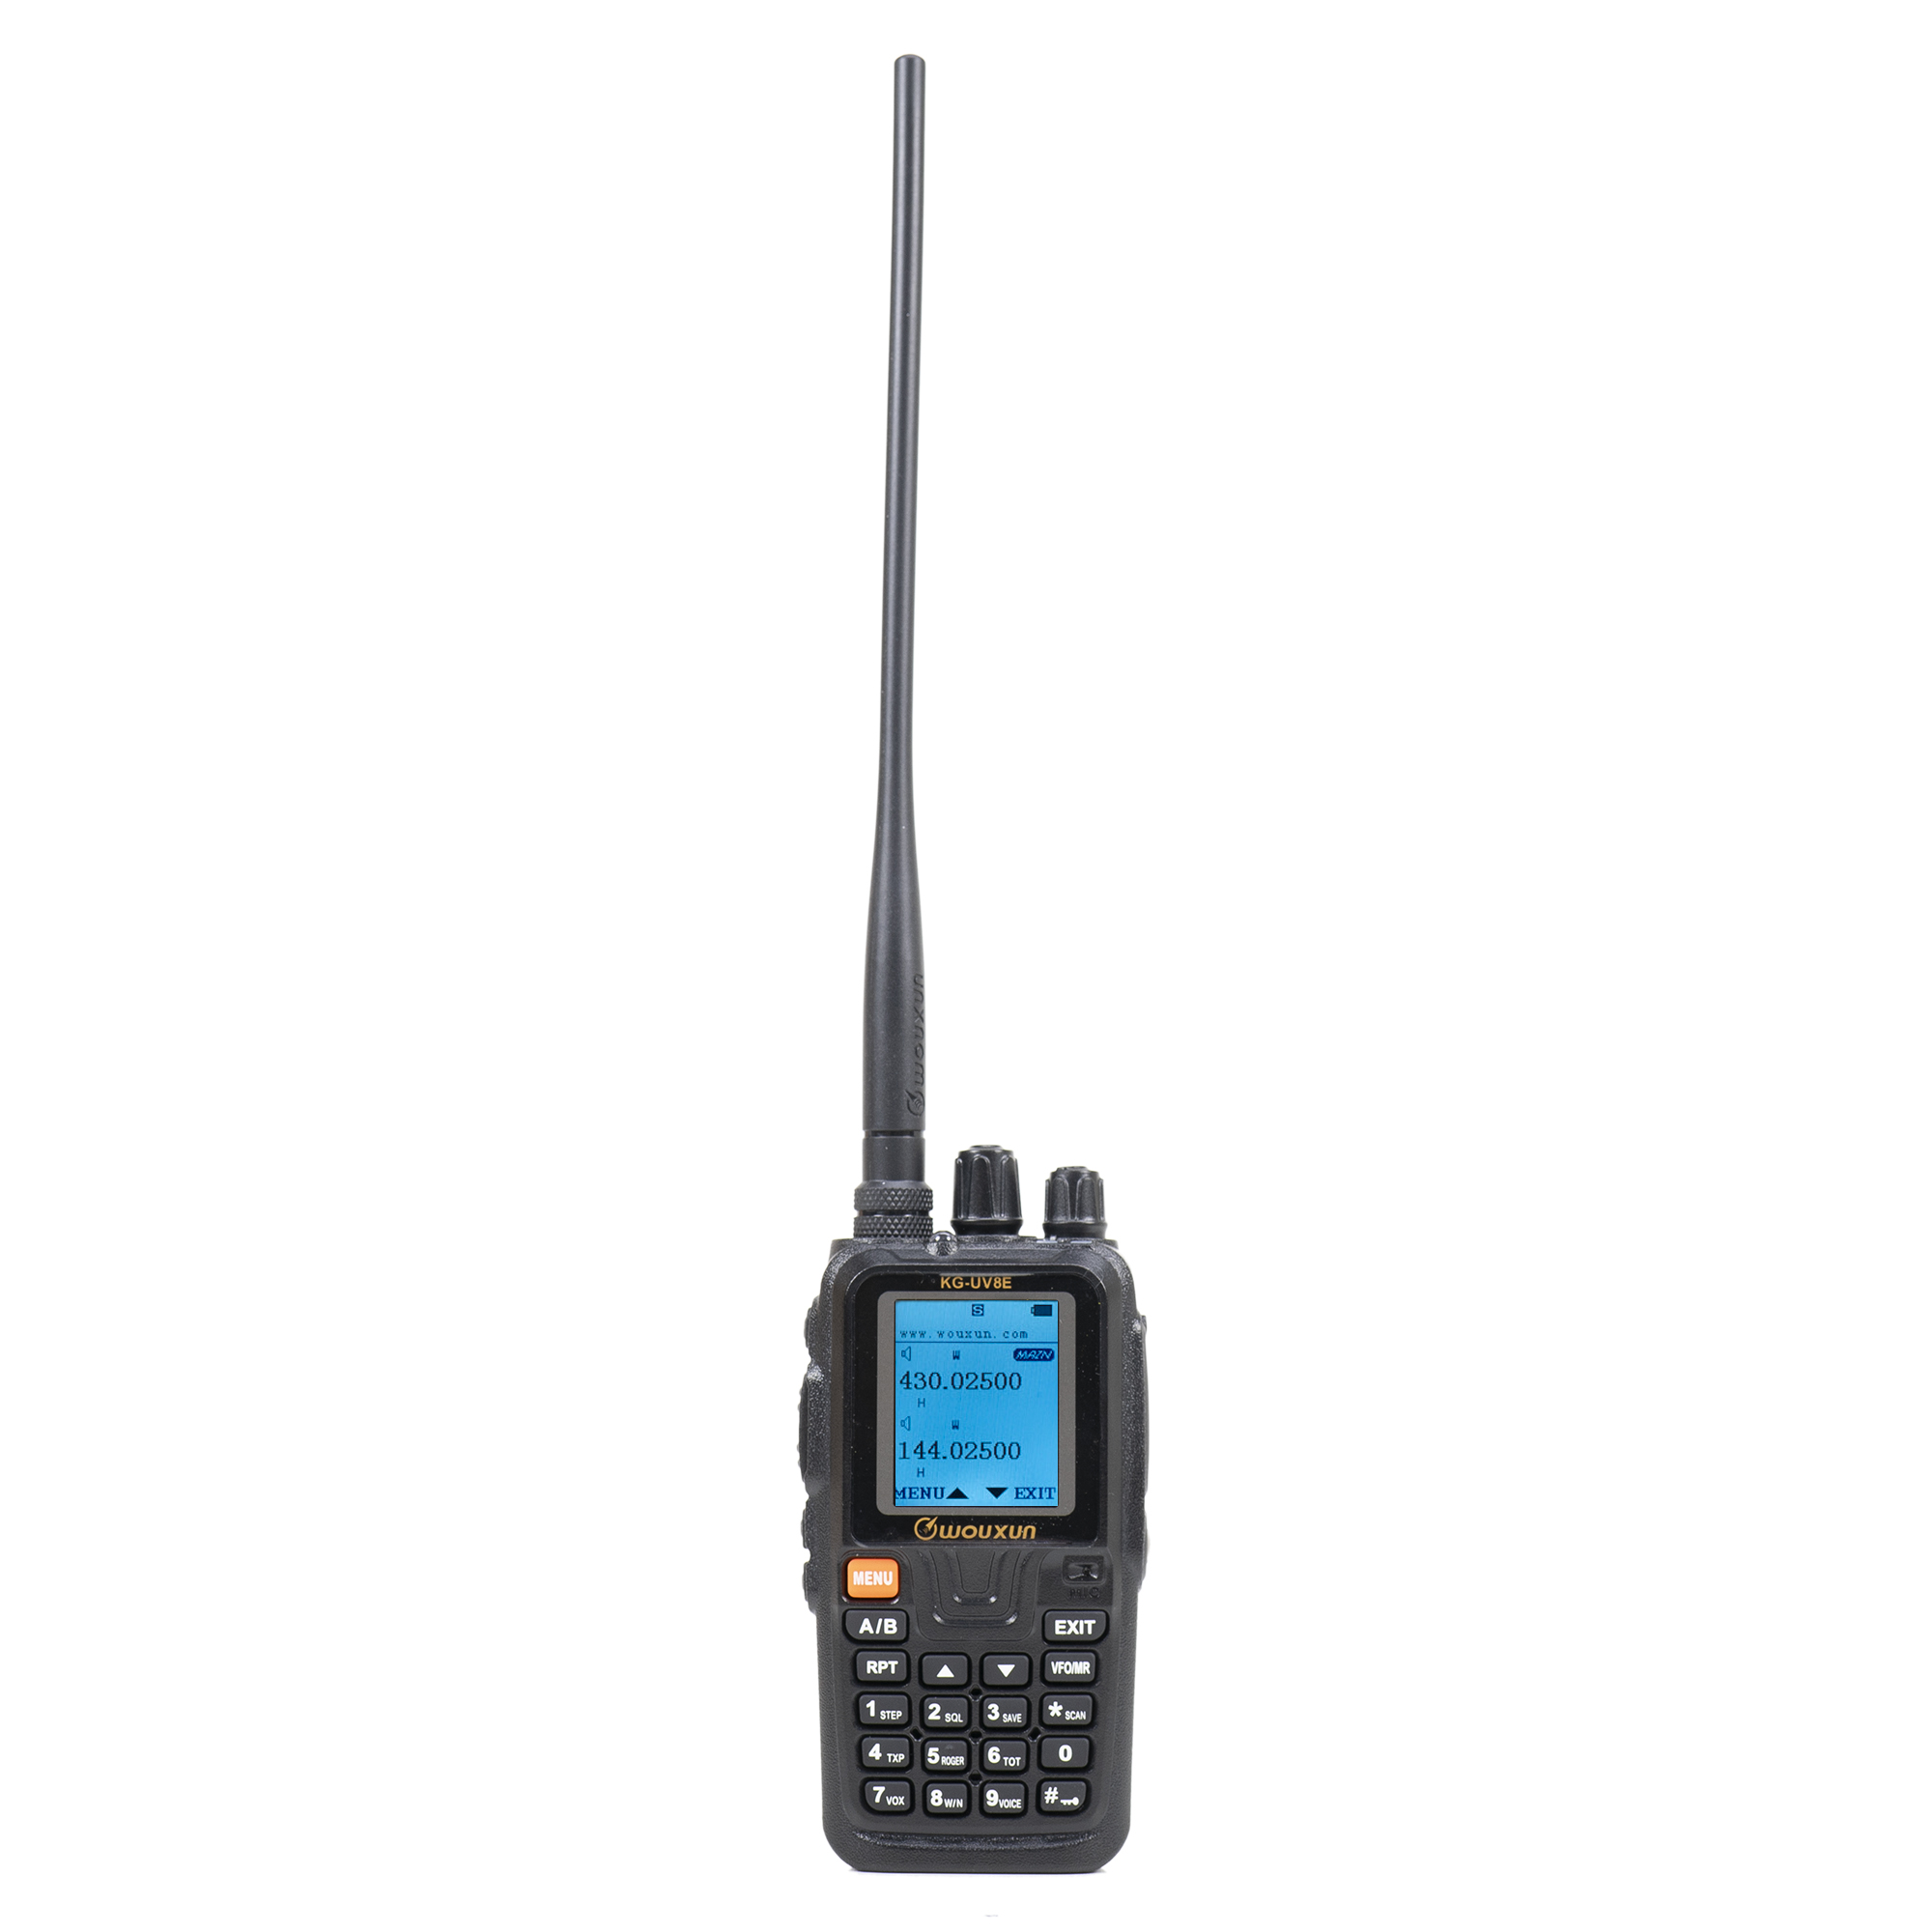 Statie radio portabila VHF/UHF PNI KG-UV8E, dual band, 144-146MHz si 430-440Mhz, Vox, Scan, Scrambler, TOT, acumulator 1700mAh